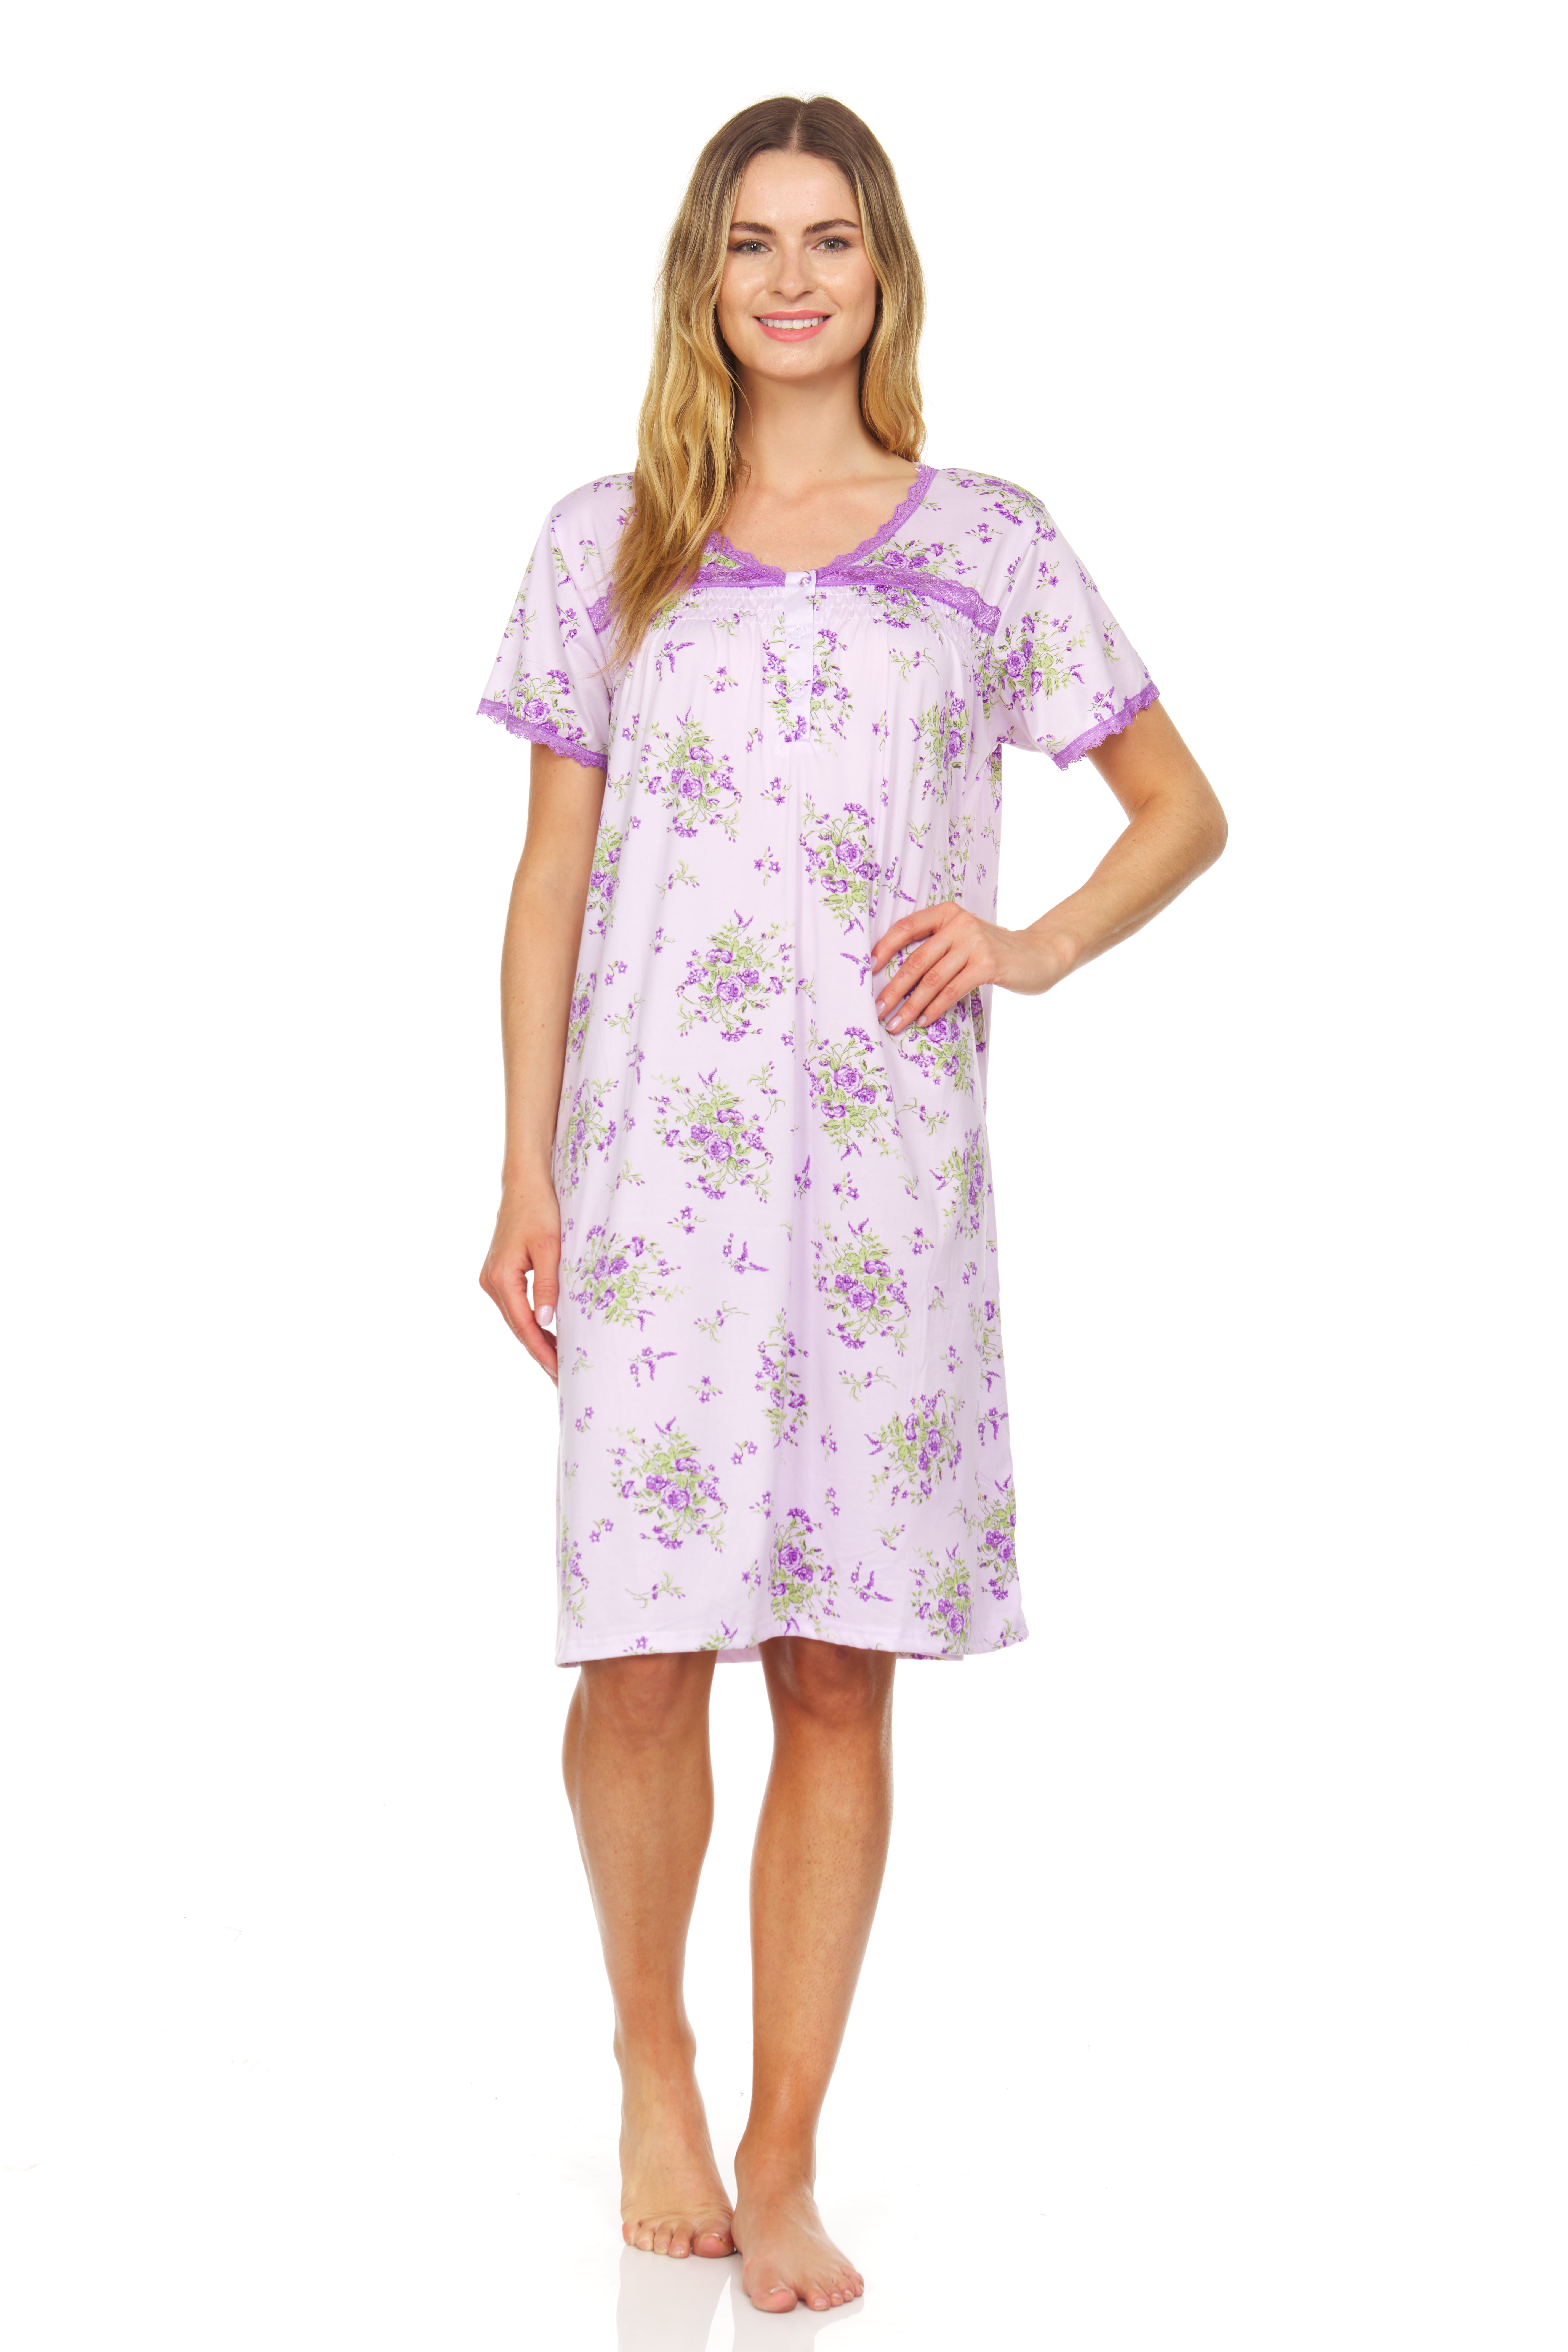 820 Women Short Sleeve Nightgown Sleepwear Nightshirt Pajamas Purple XL